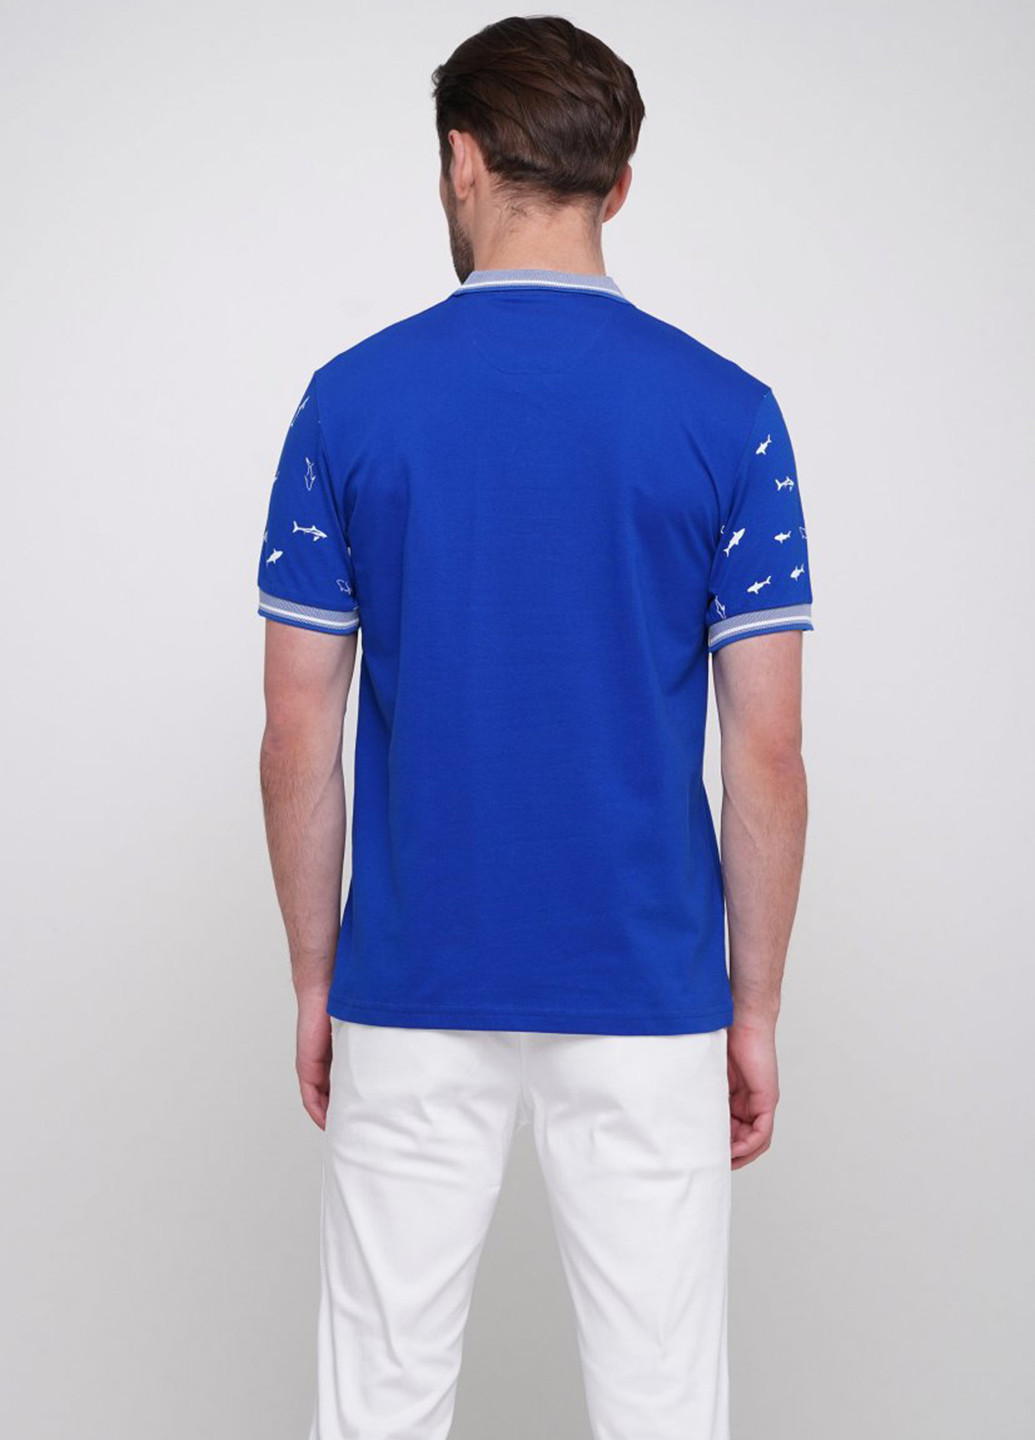 Синяя футболка-поло для мужчин Trend Collection с рисунком